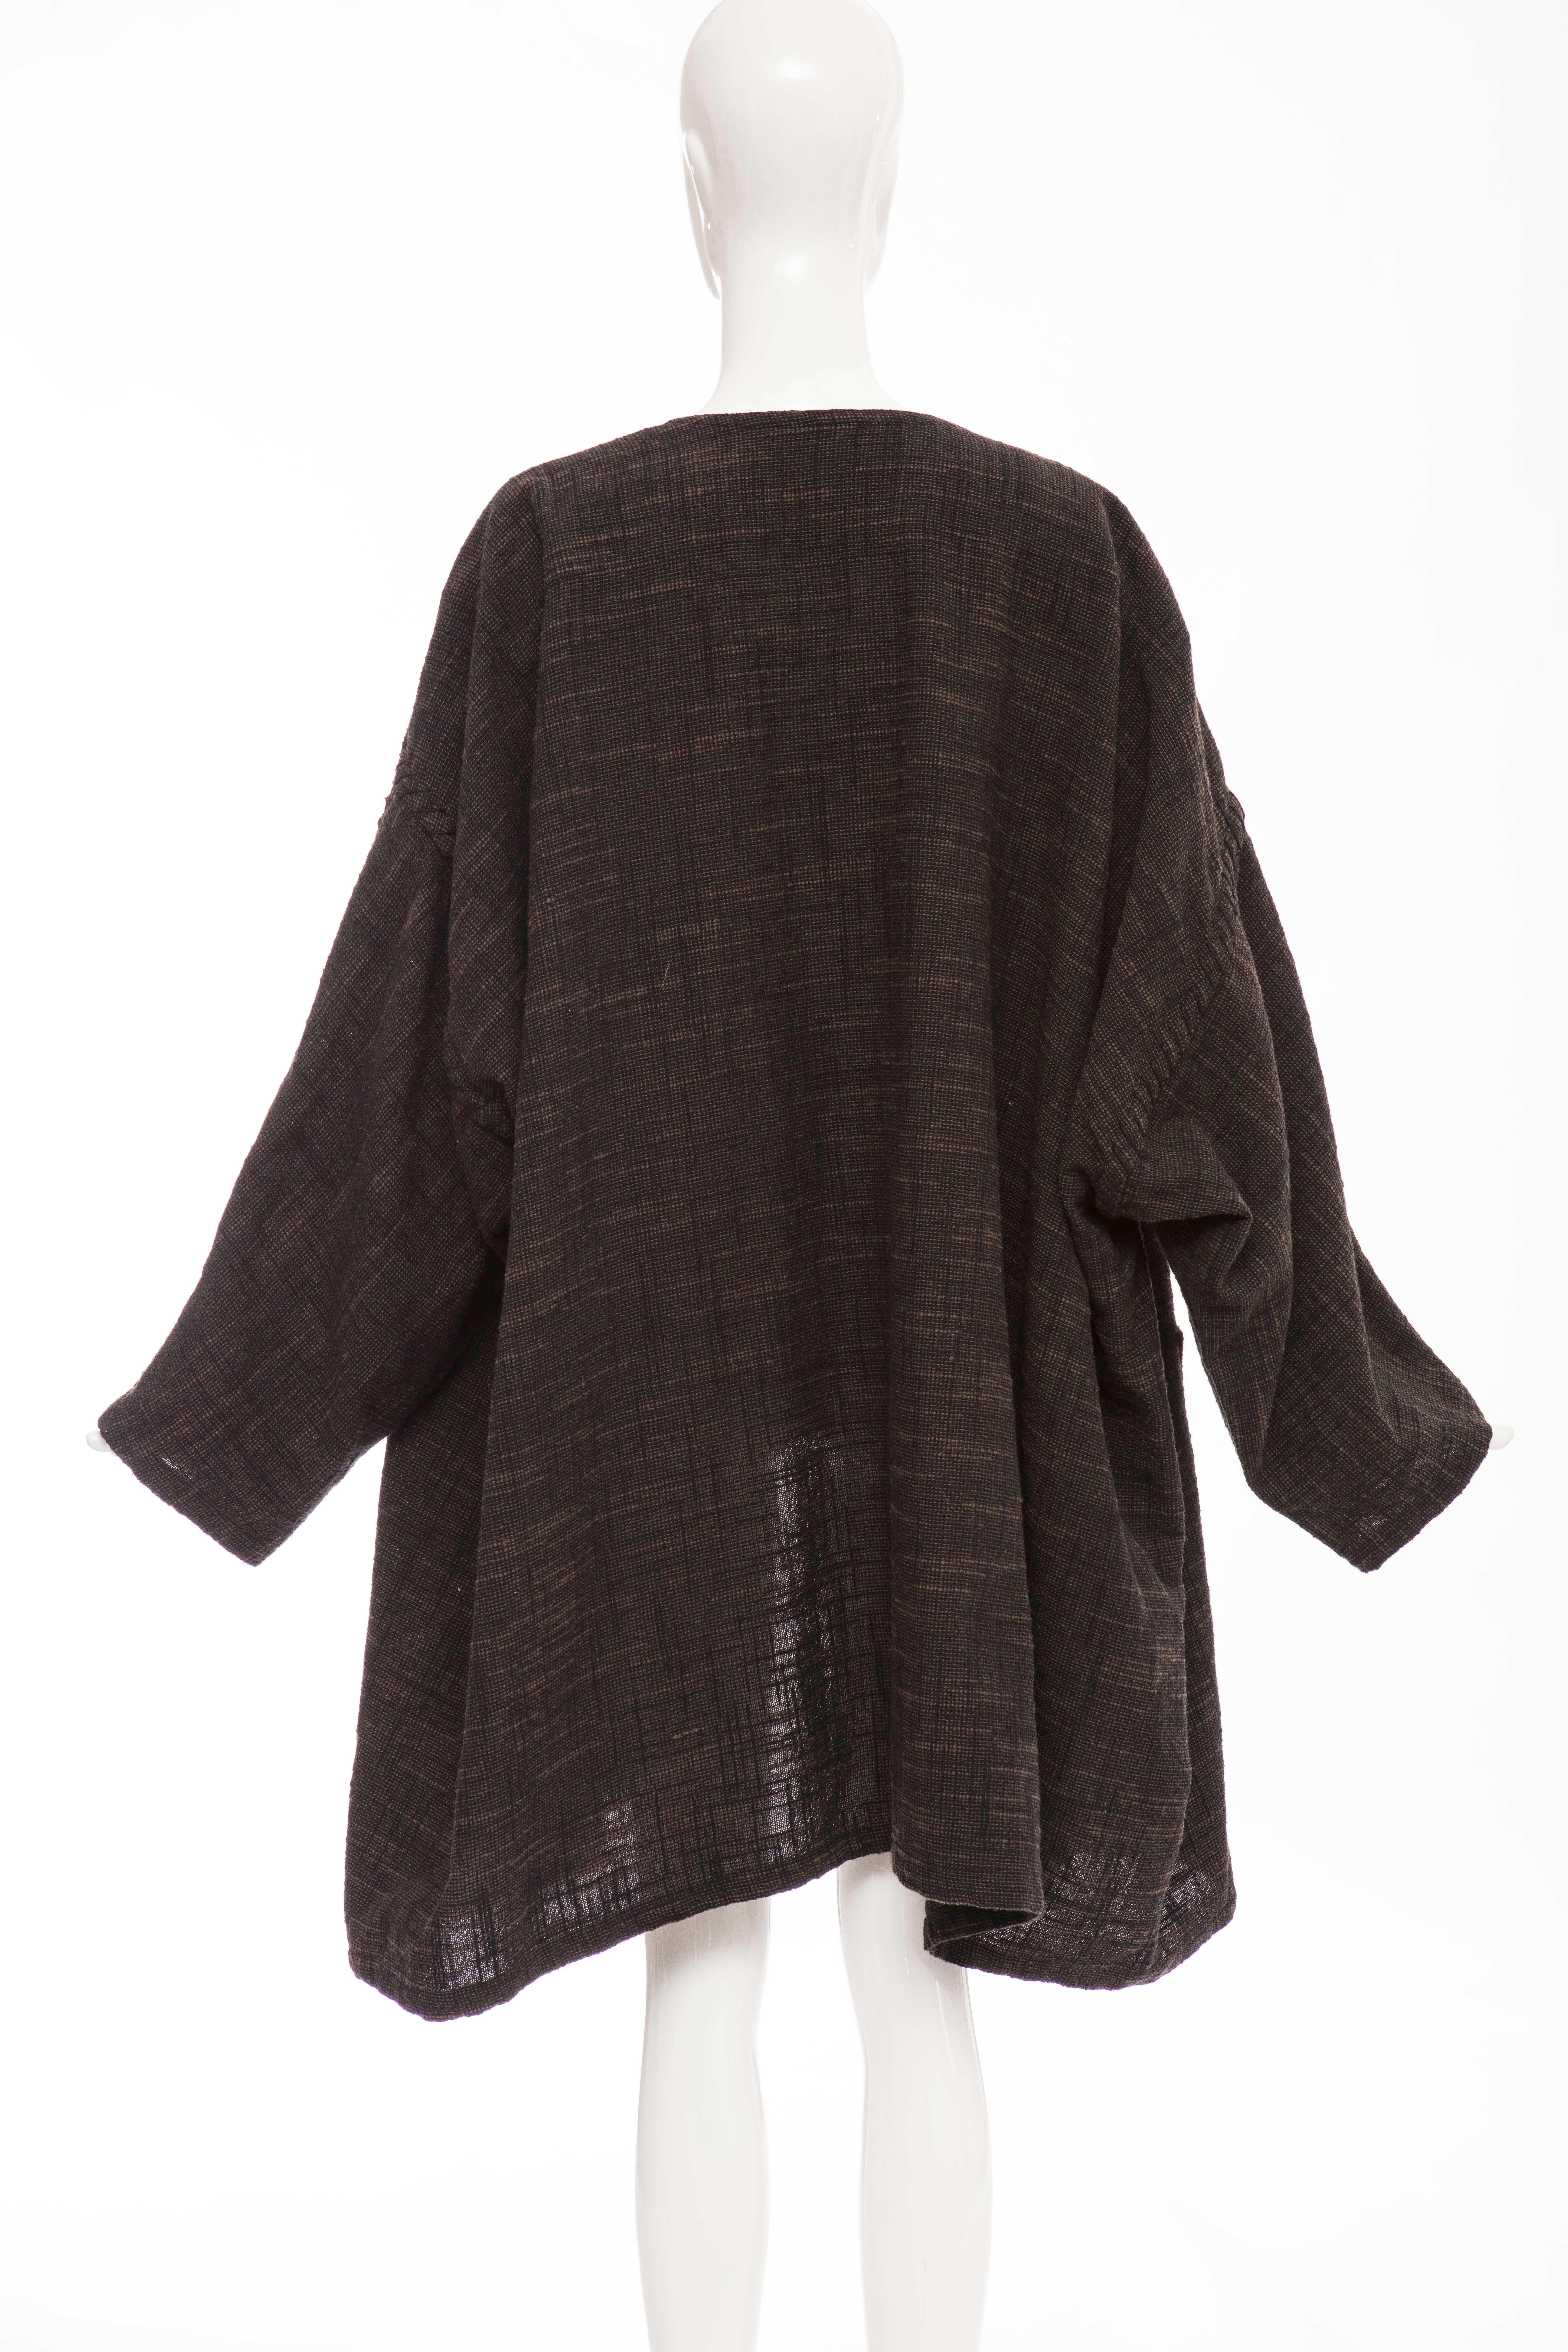 Black Issey Miyake Plantation Cotton Wool Nylon Woven Open Front Jacket, Circa 1980's